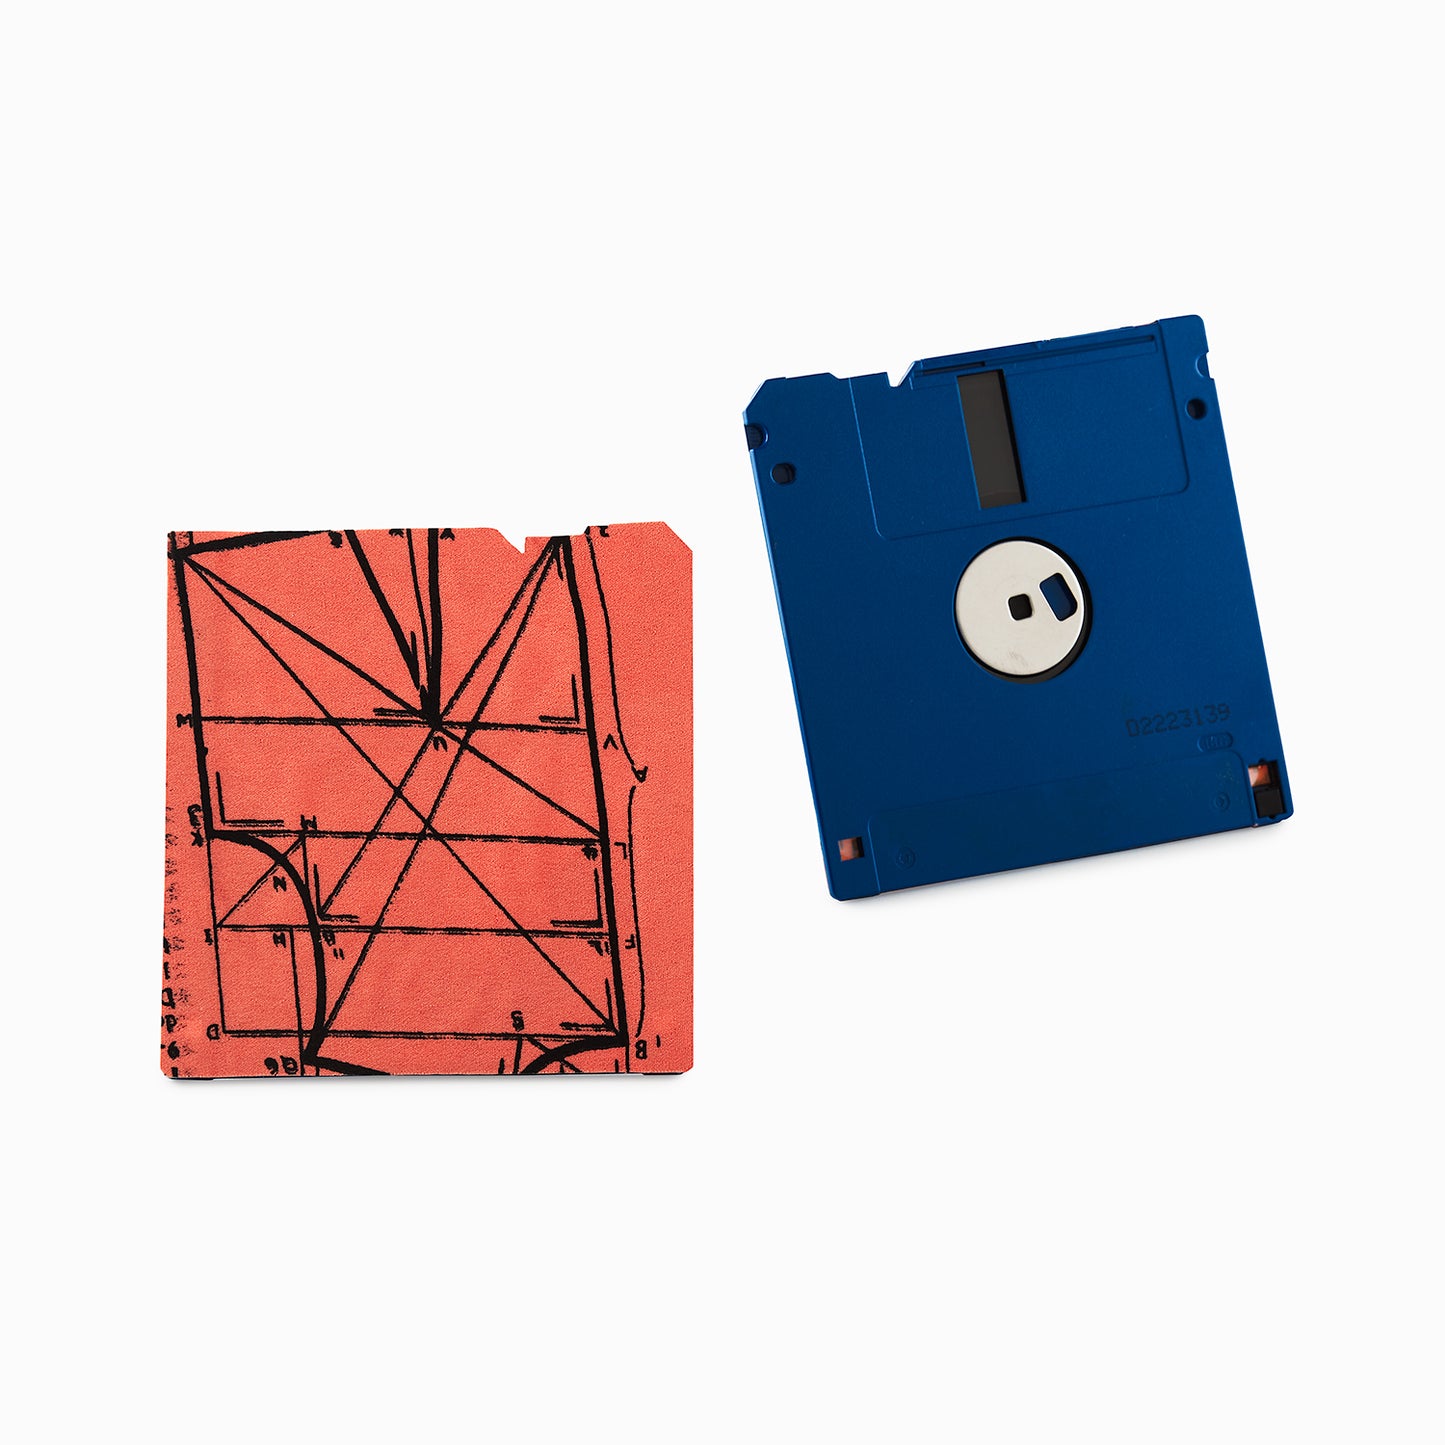 Blush Red - Floppy Disk Coaster